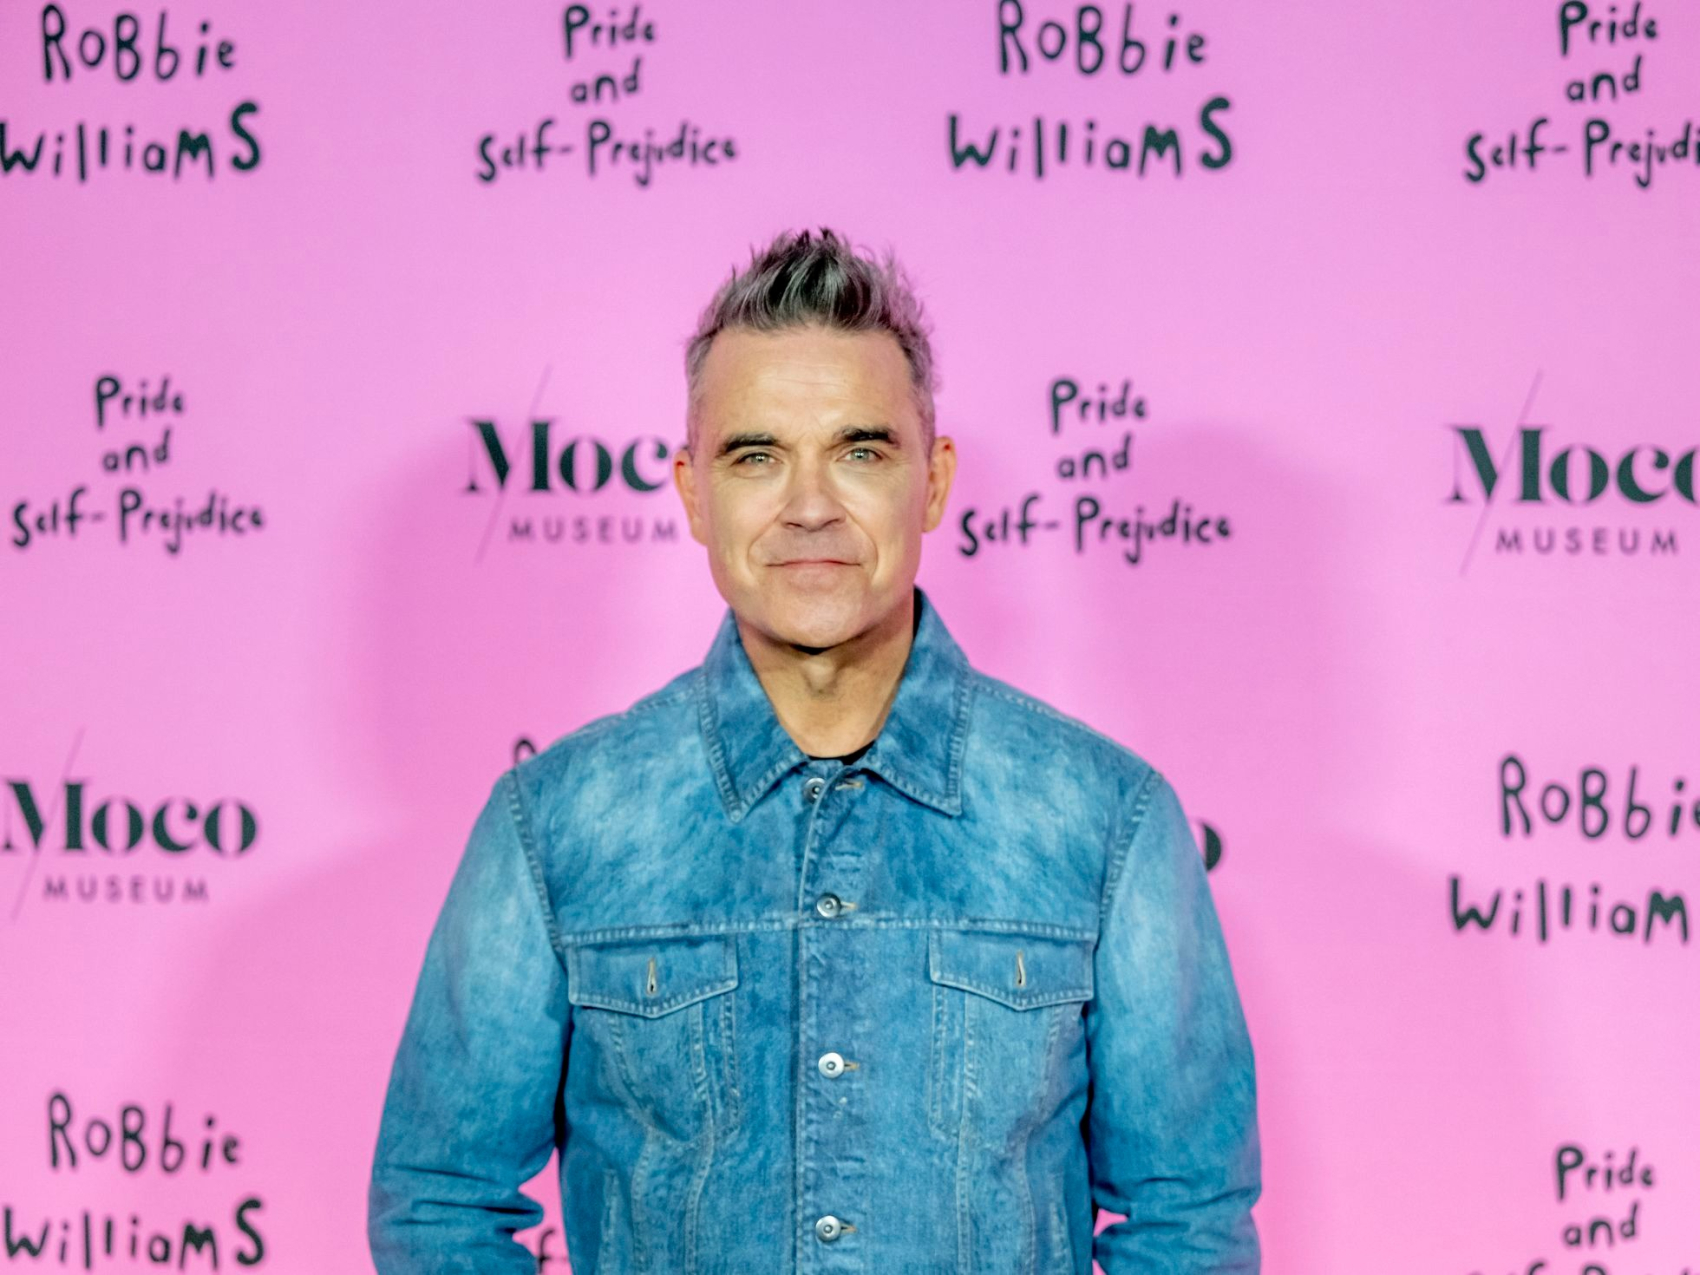 Robbie Williams aan de muur in Moco Museum